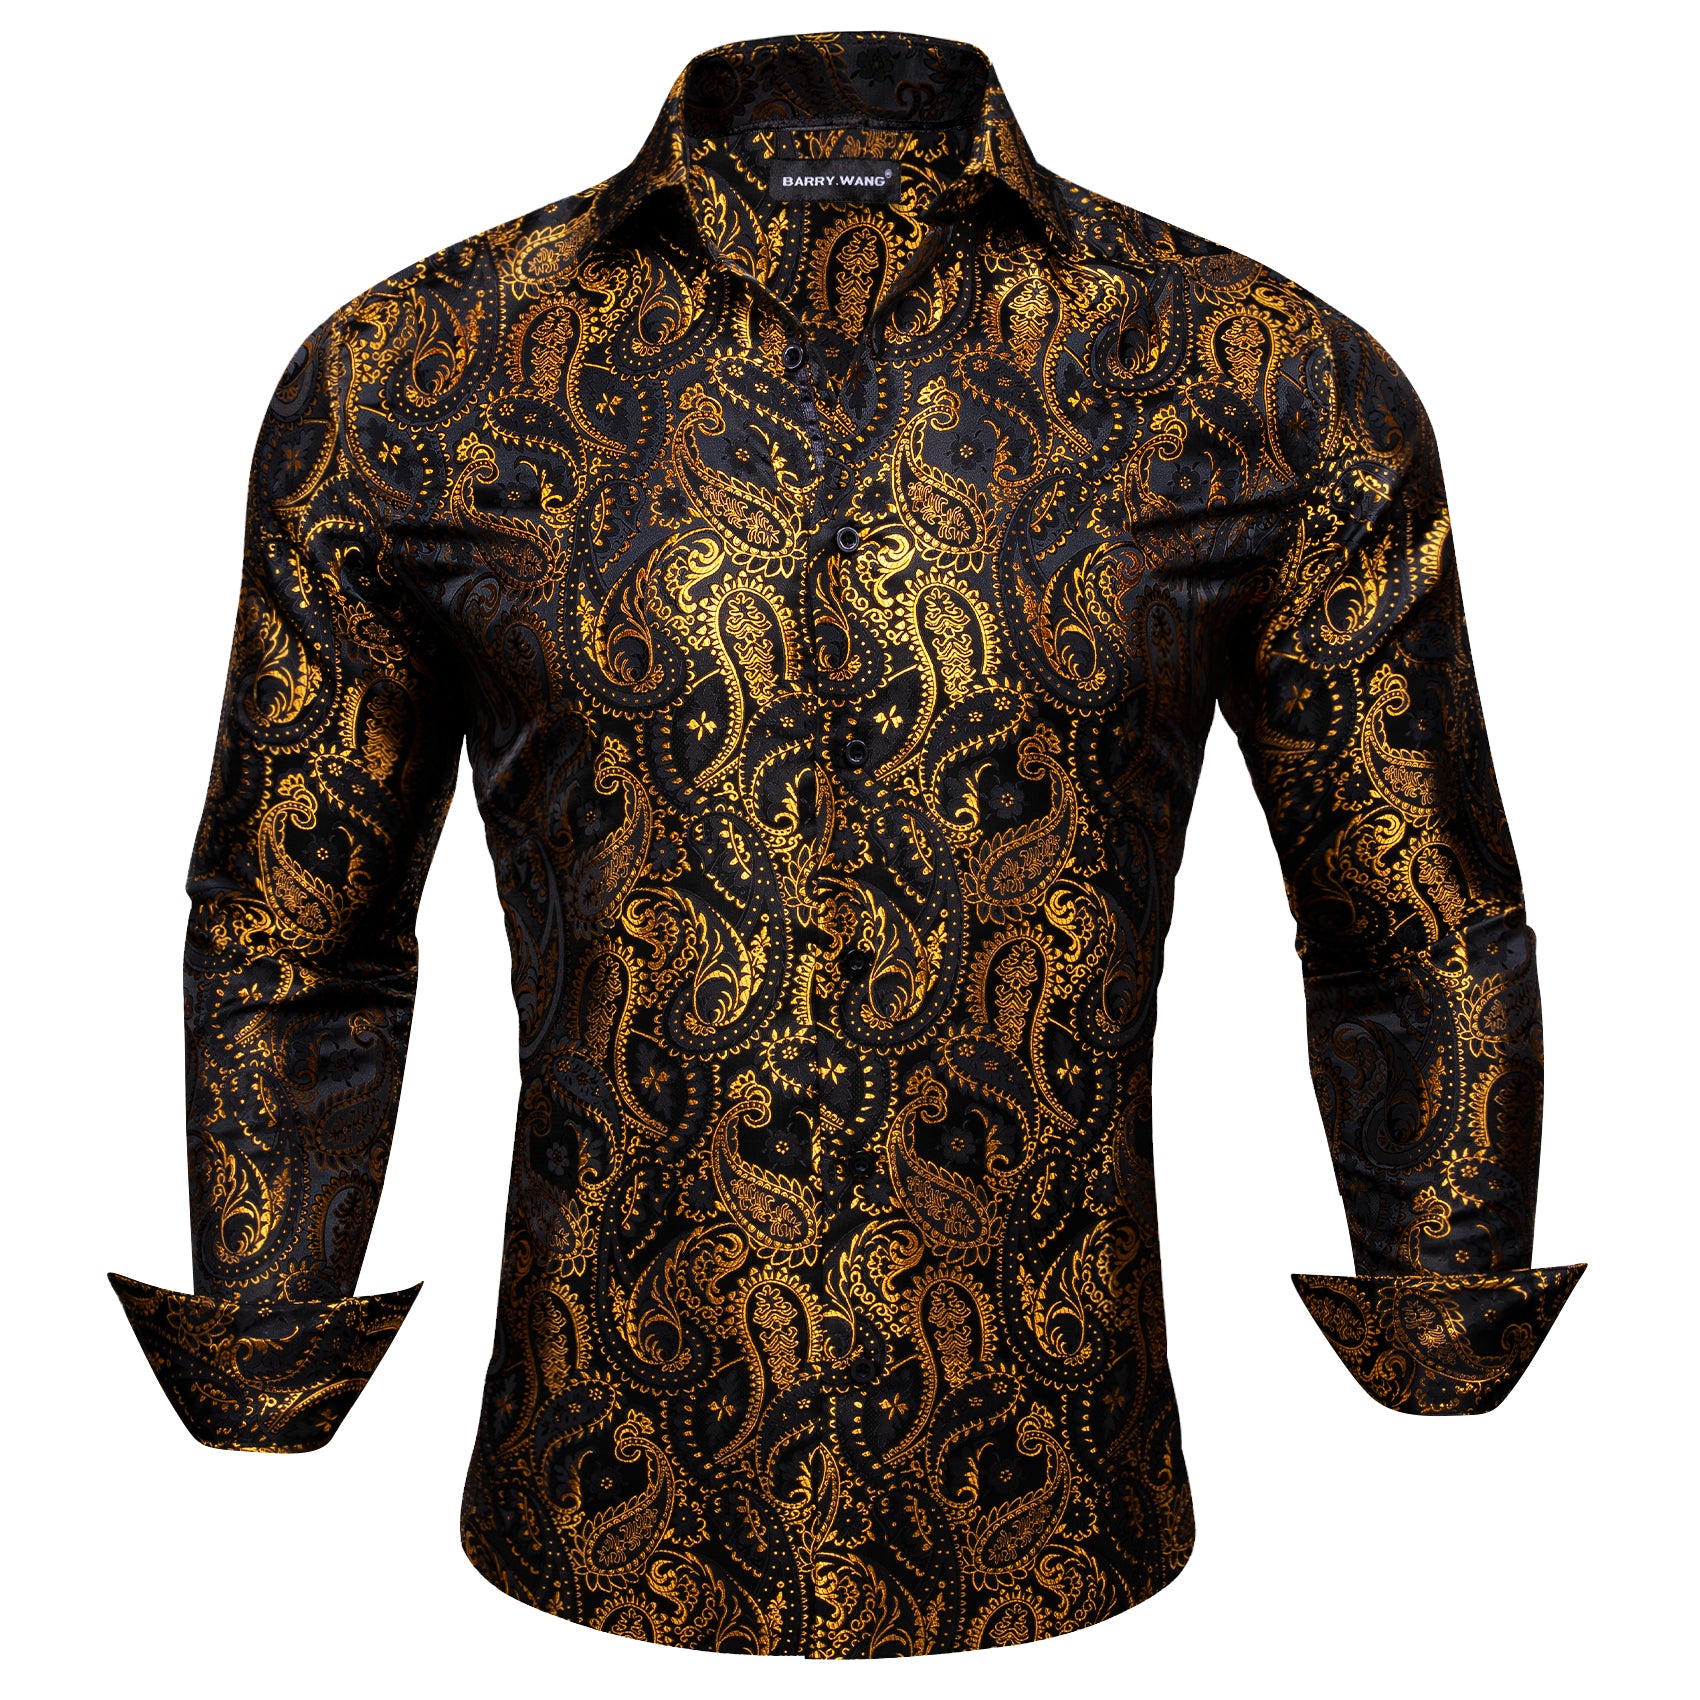 Barry.wang Black Gold Paisley Silk Men's Shirt